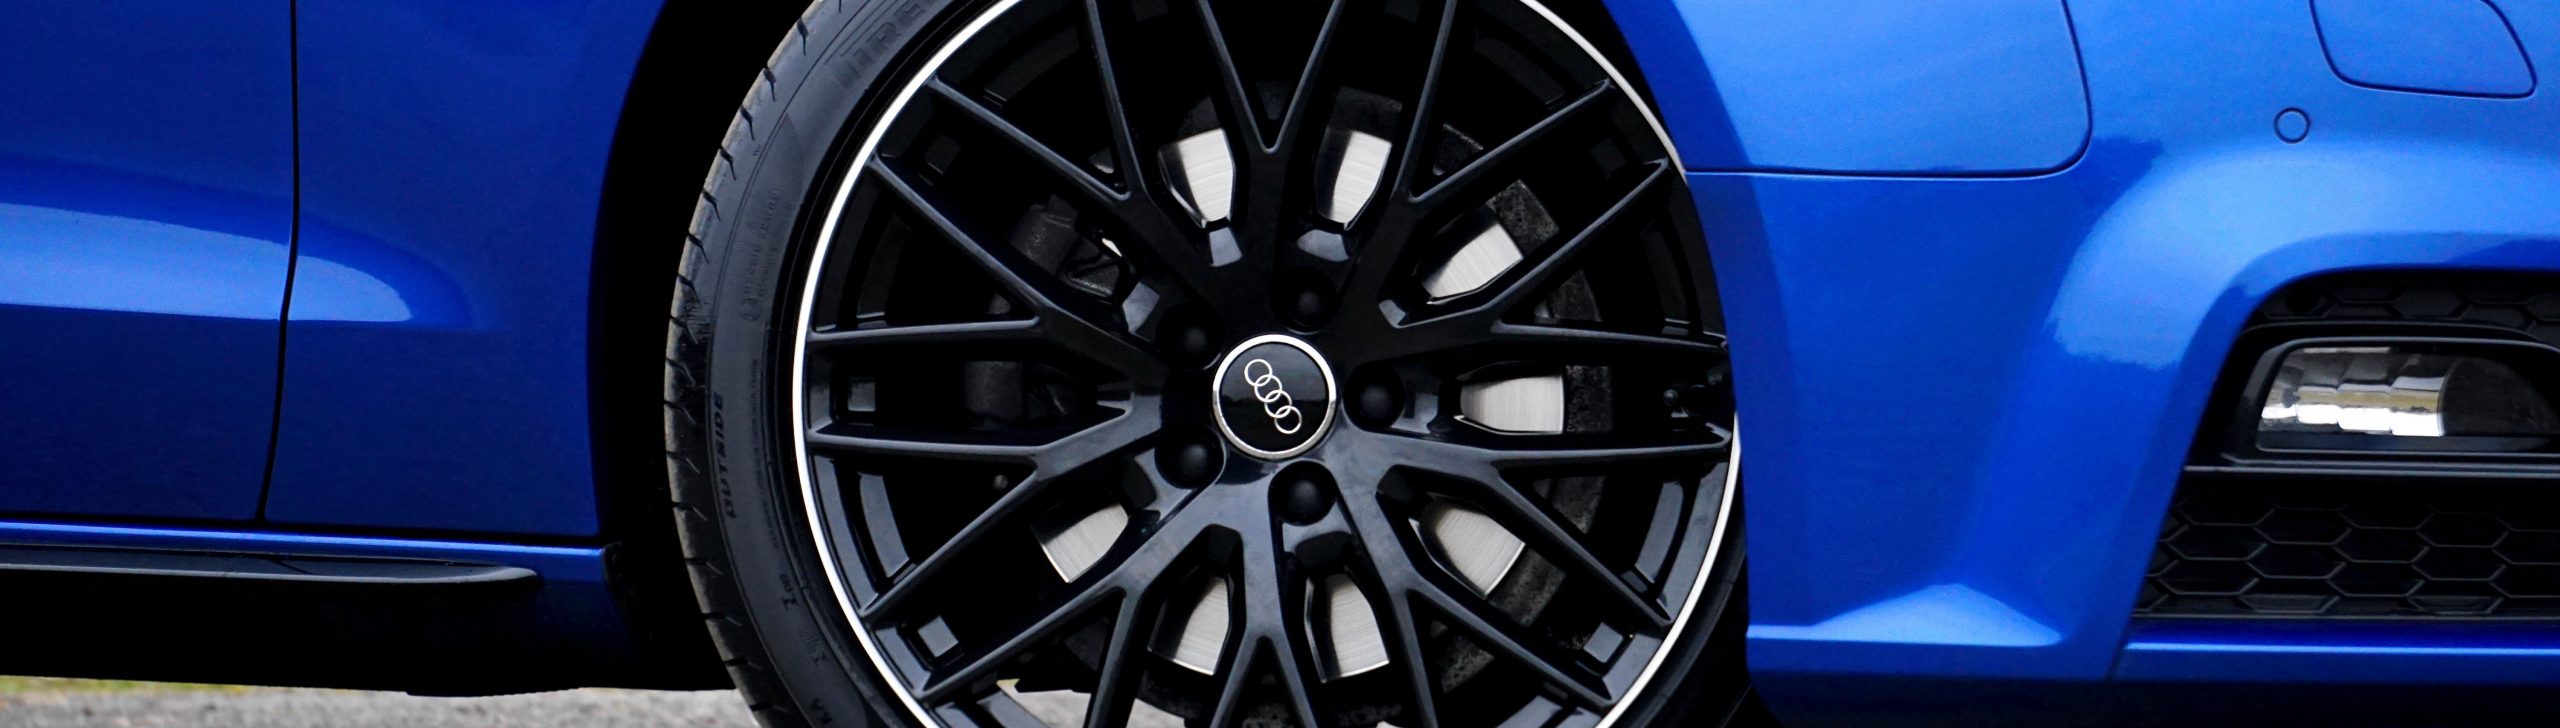 Close up of blue Audi car wheel